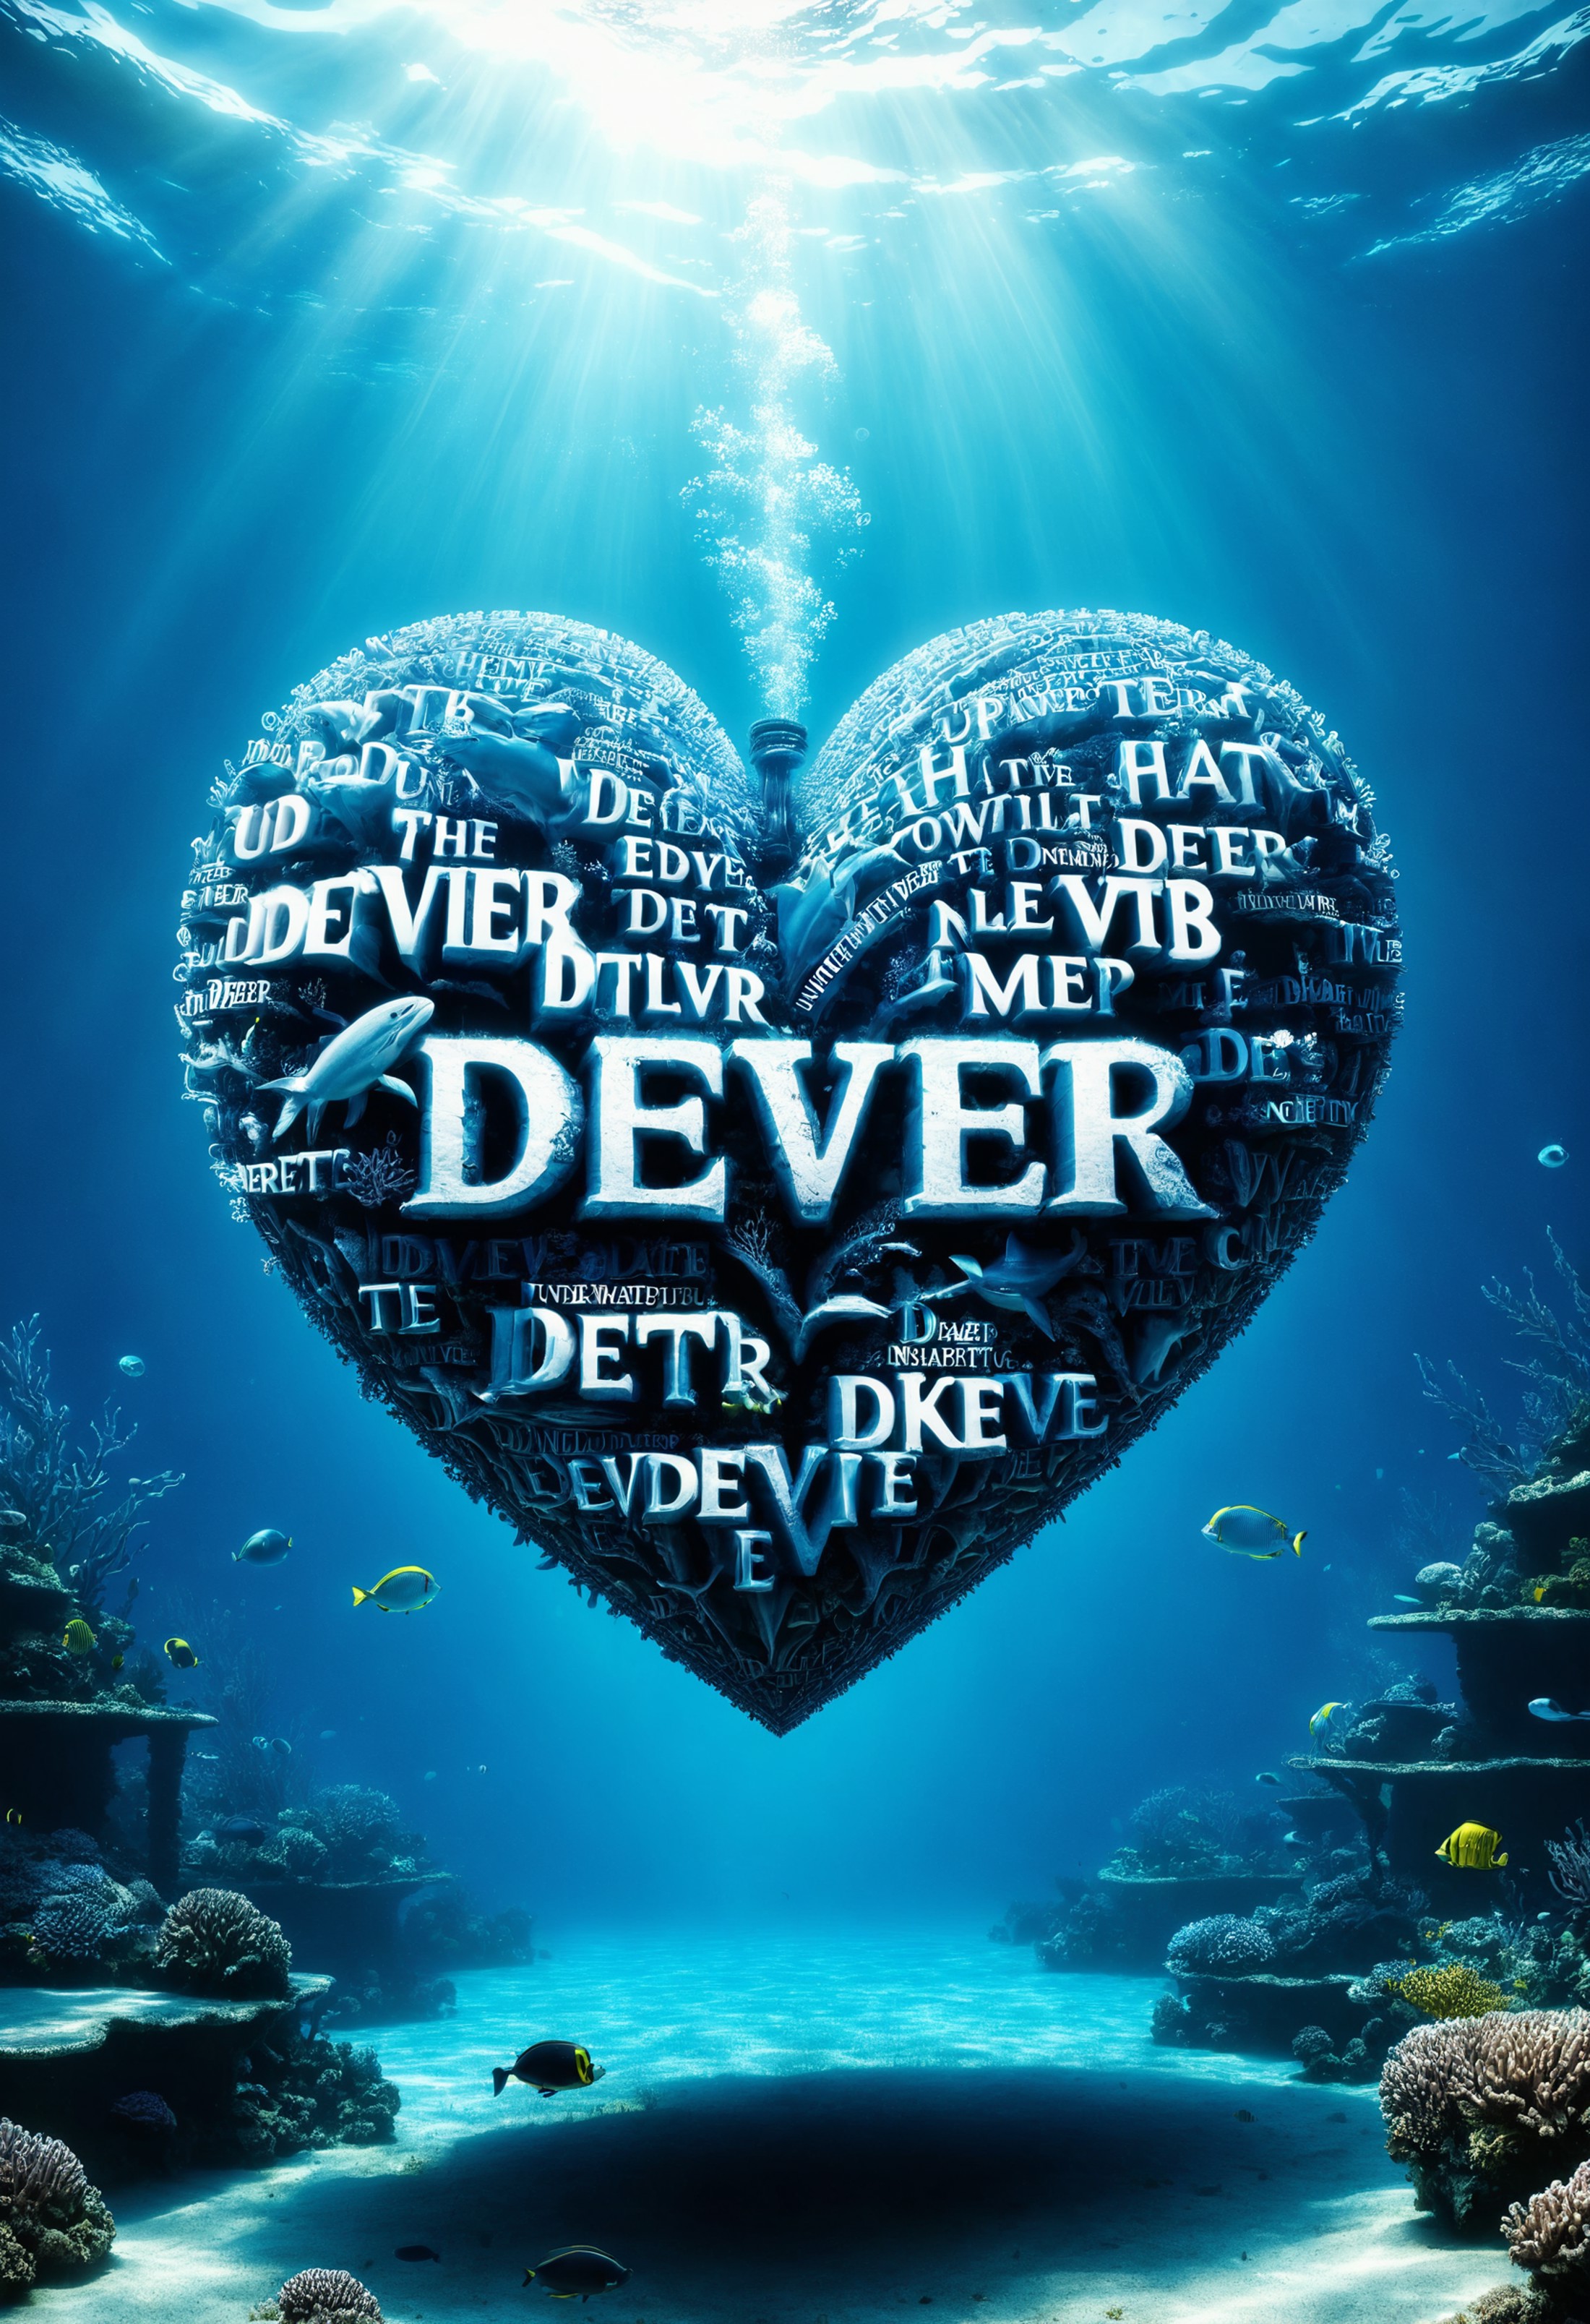 an underwater heart, text logo "Dever"
<lora:dvr-txt:1> dvr-txt